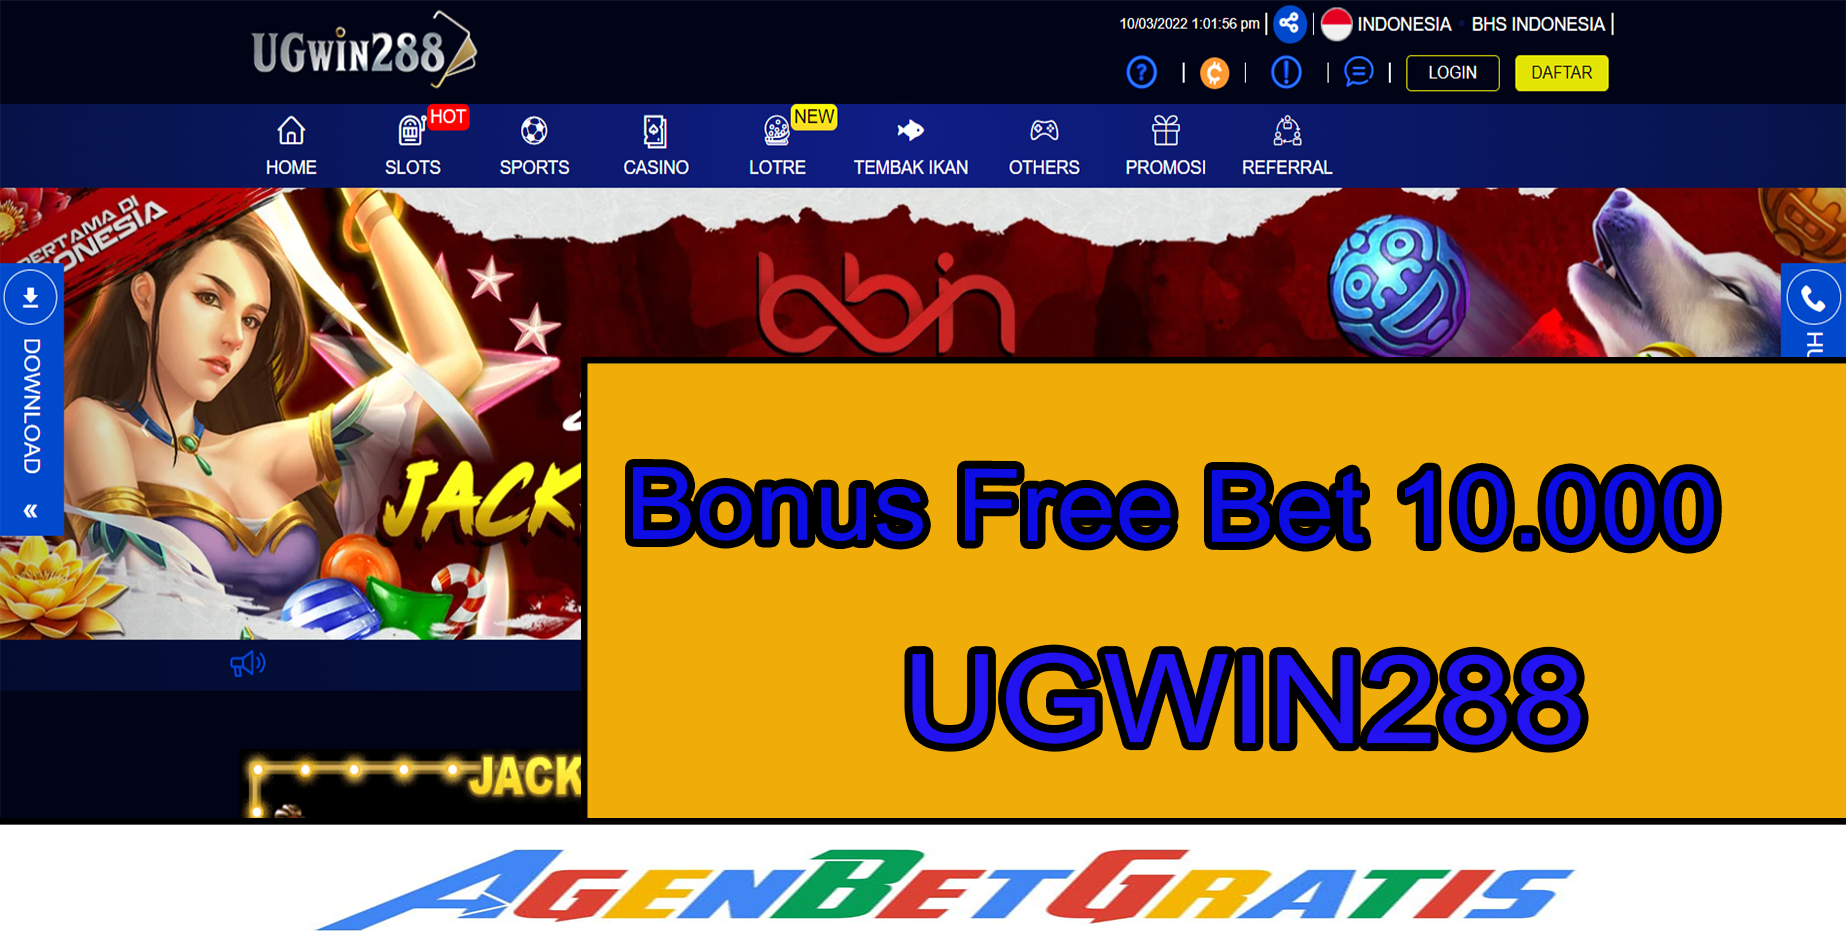 UGWIN288 - Bonus FreeBet 10.000